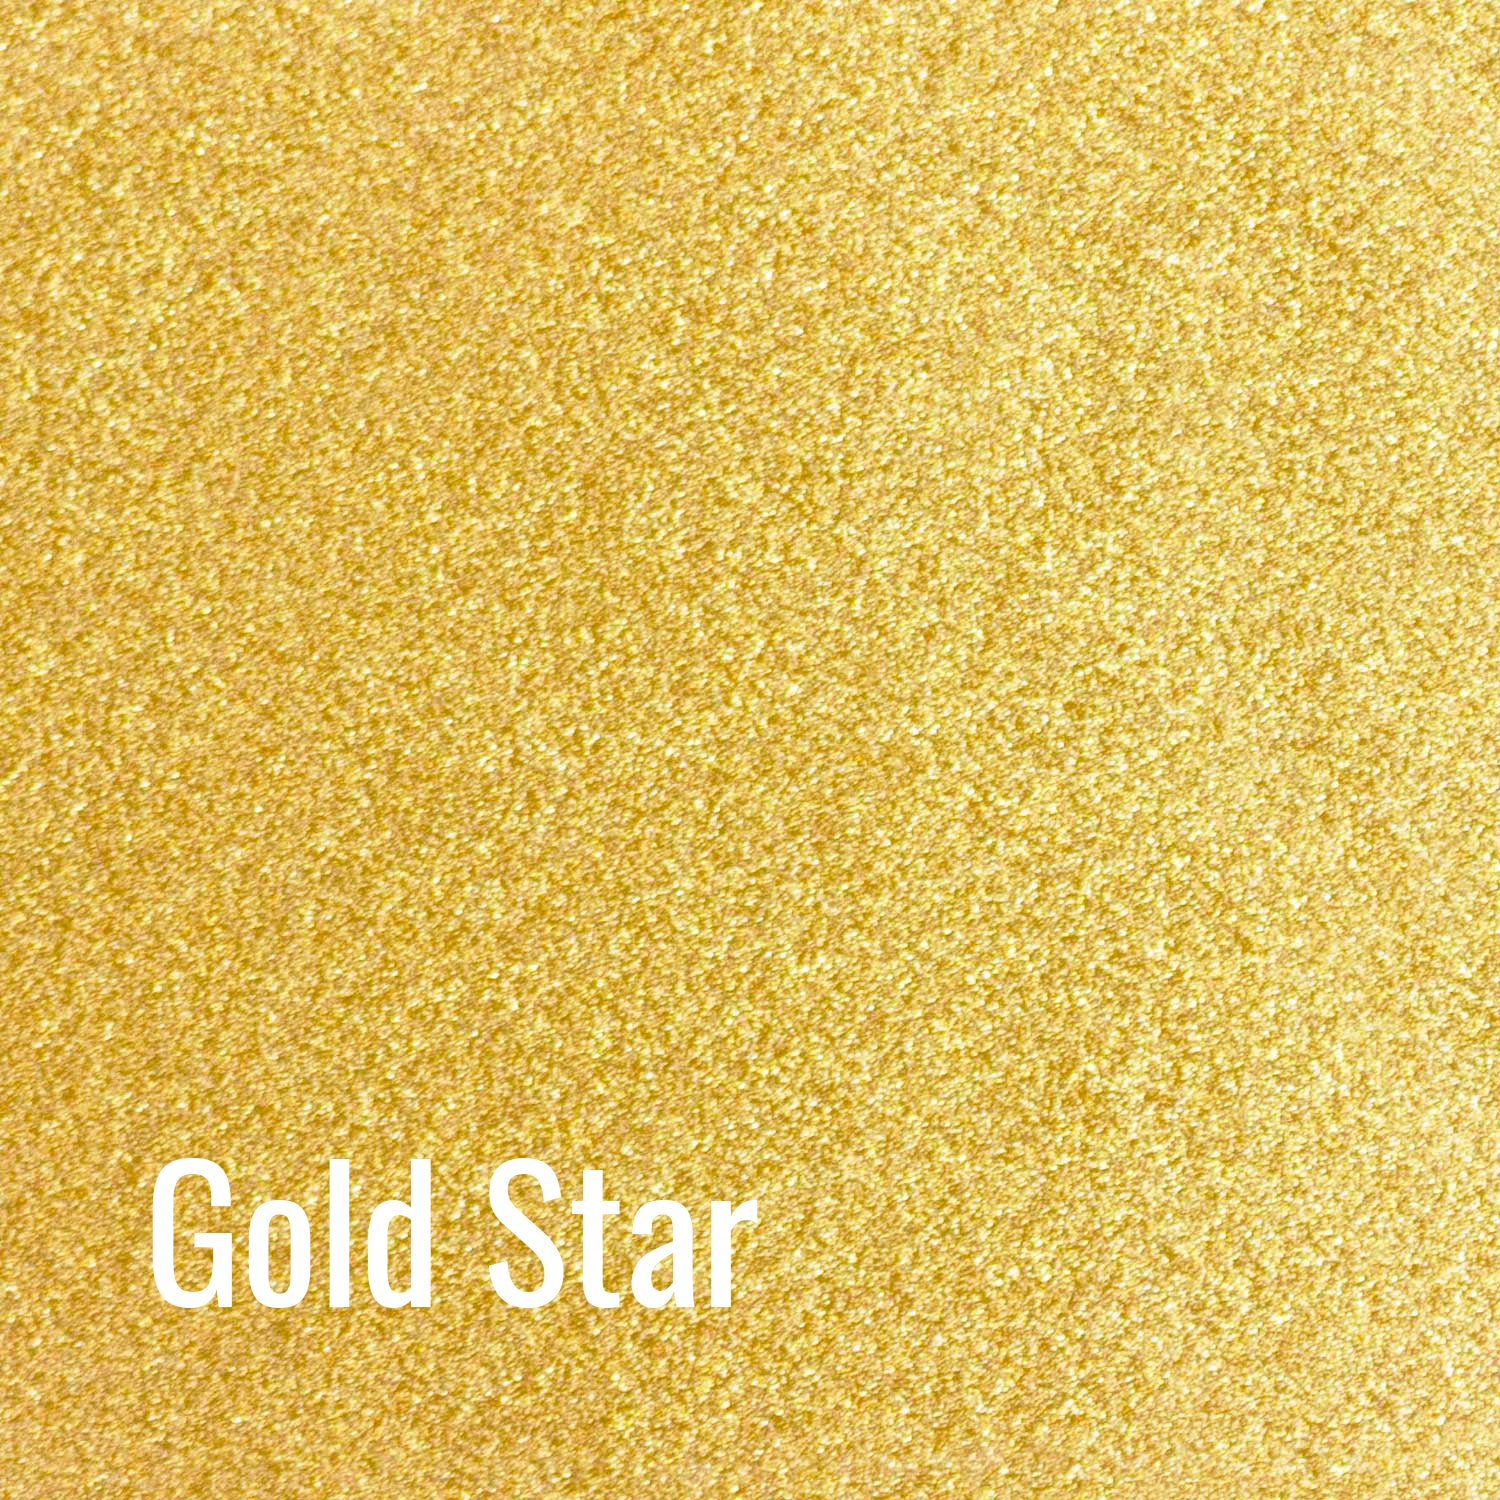 V20541 - Extra Large Glitter Star Tag Gold - GTG StarXL 51 12/PK